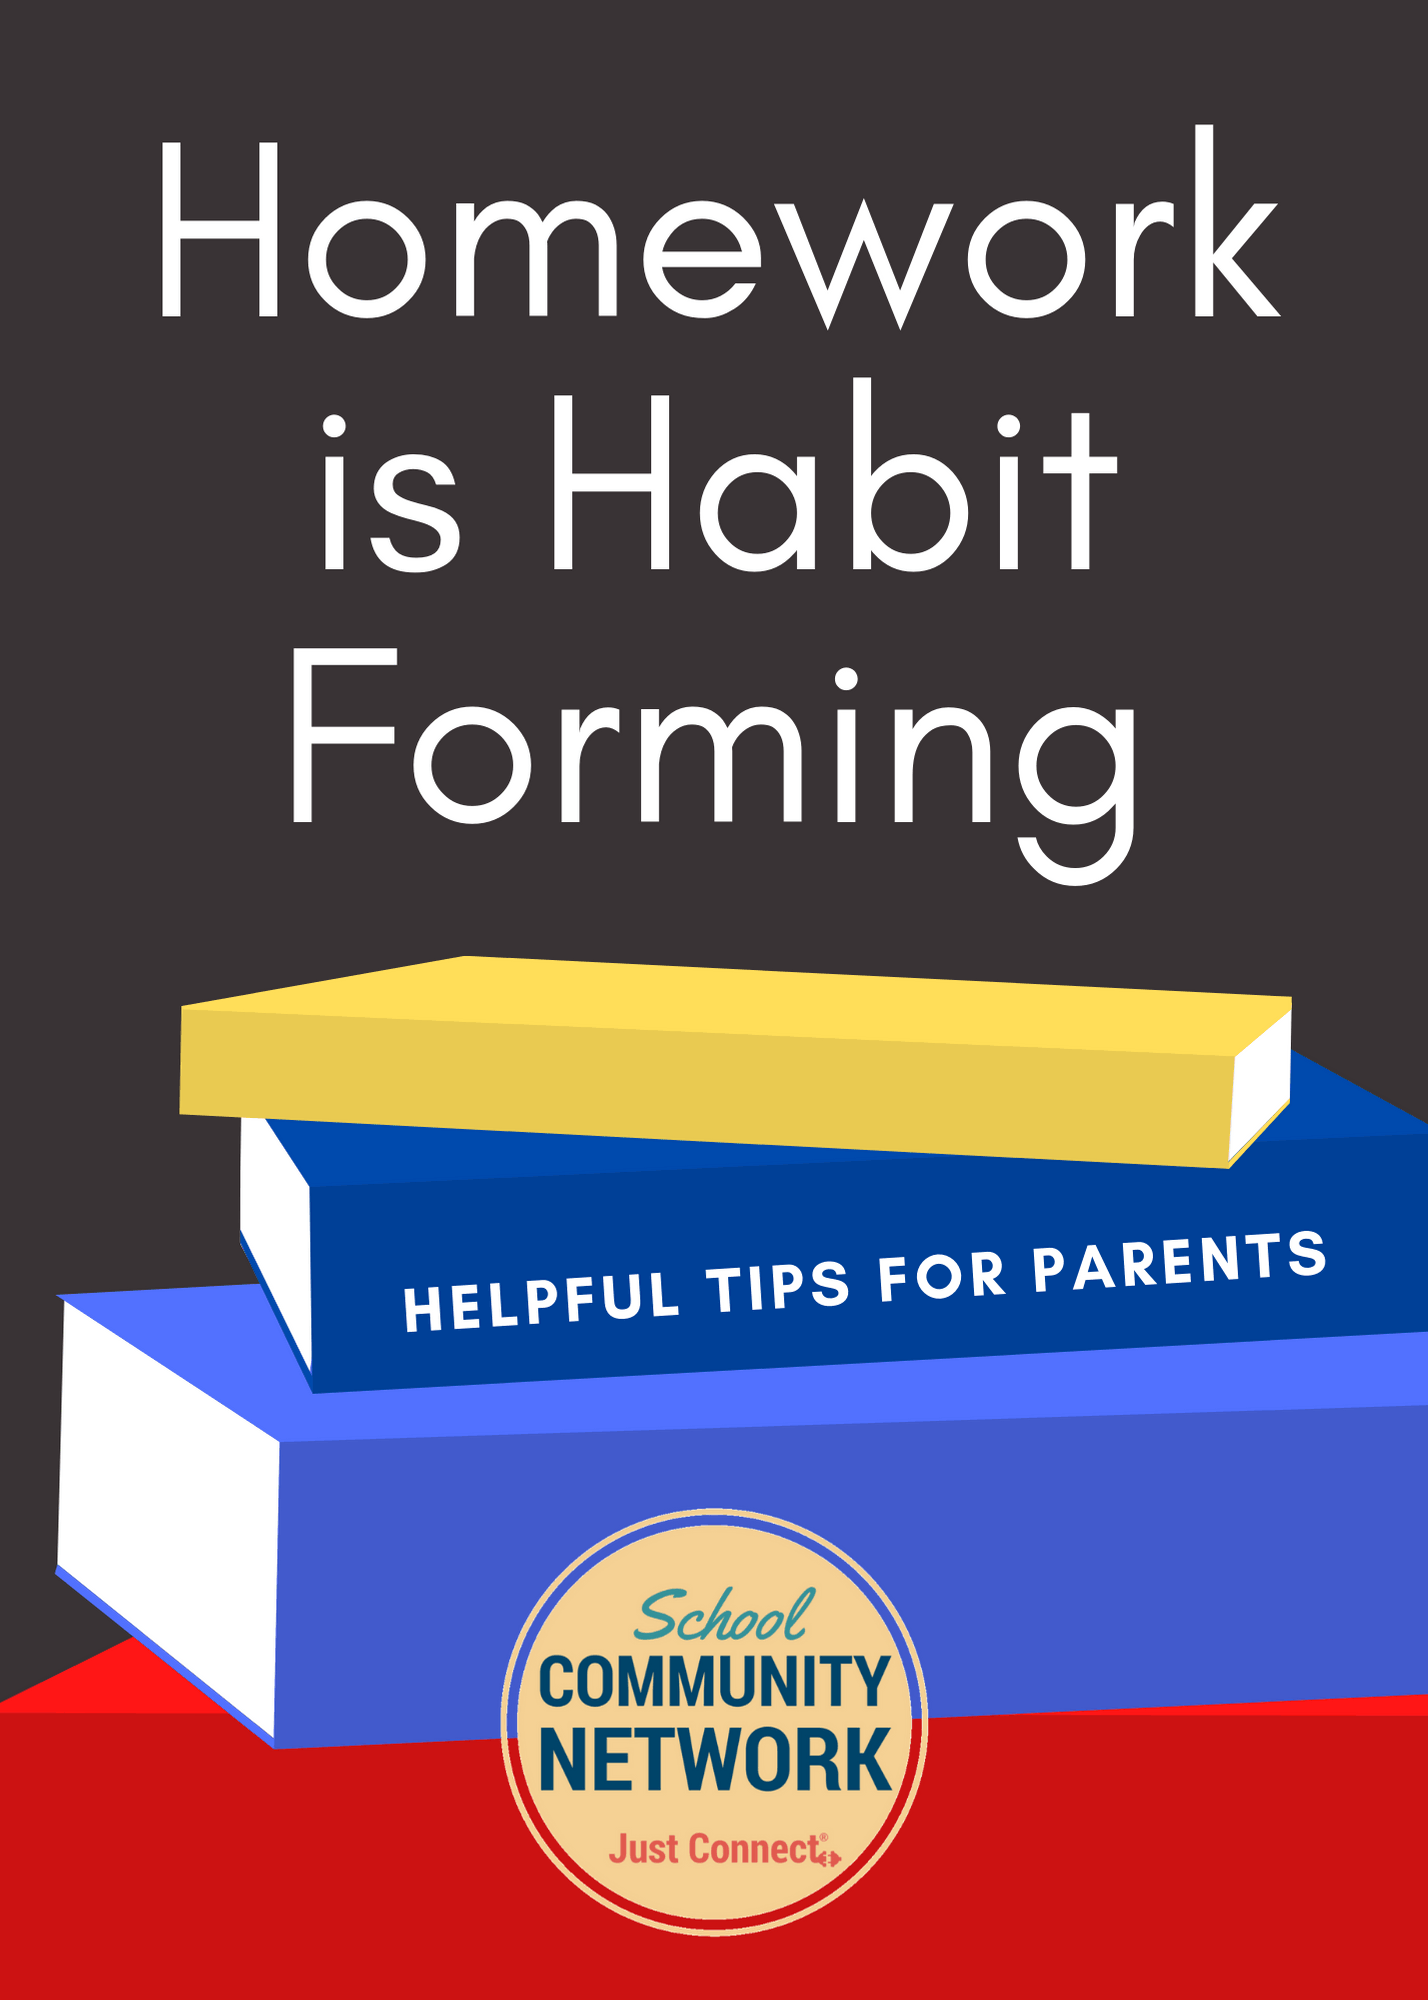 Homework is Habit Forming